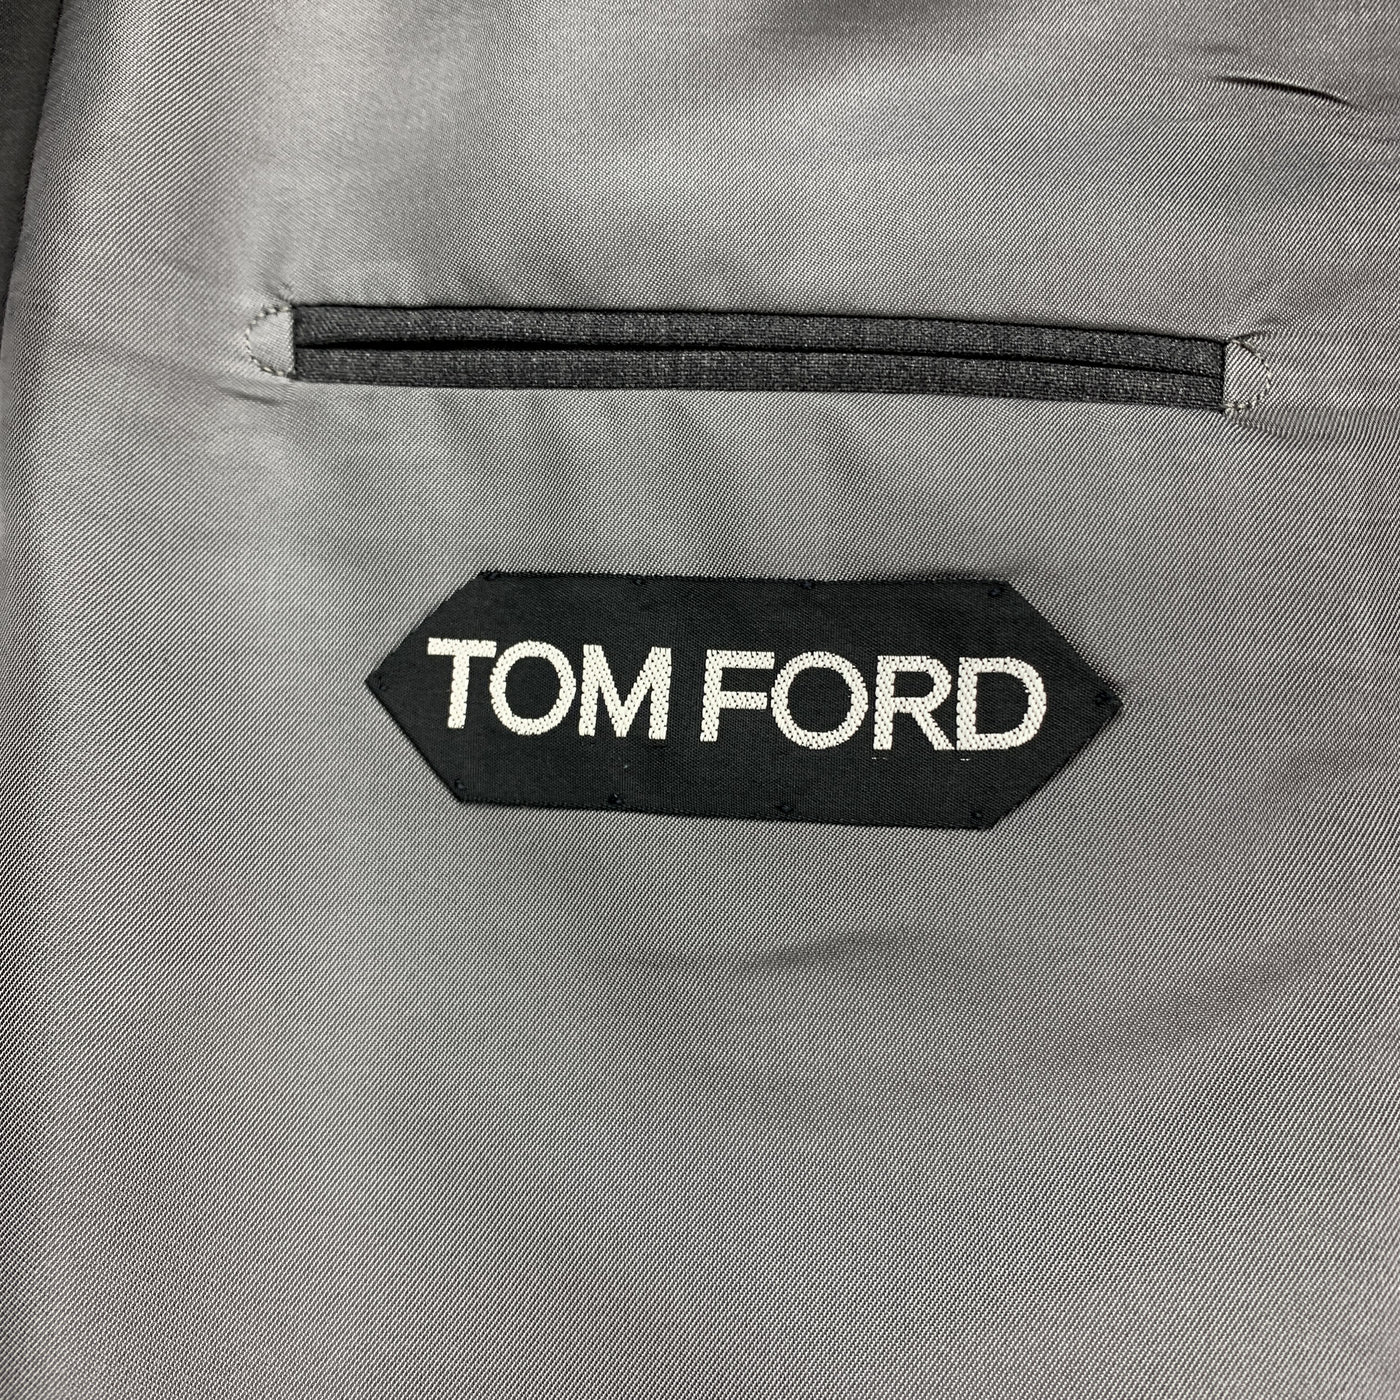 TOM FORD Size 44 Dark Gray Wool Notch Lapel Cuffed Leg Suit